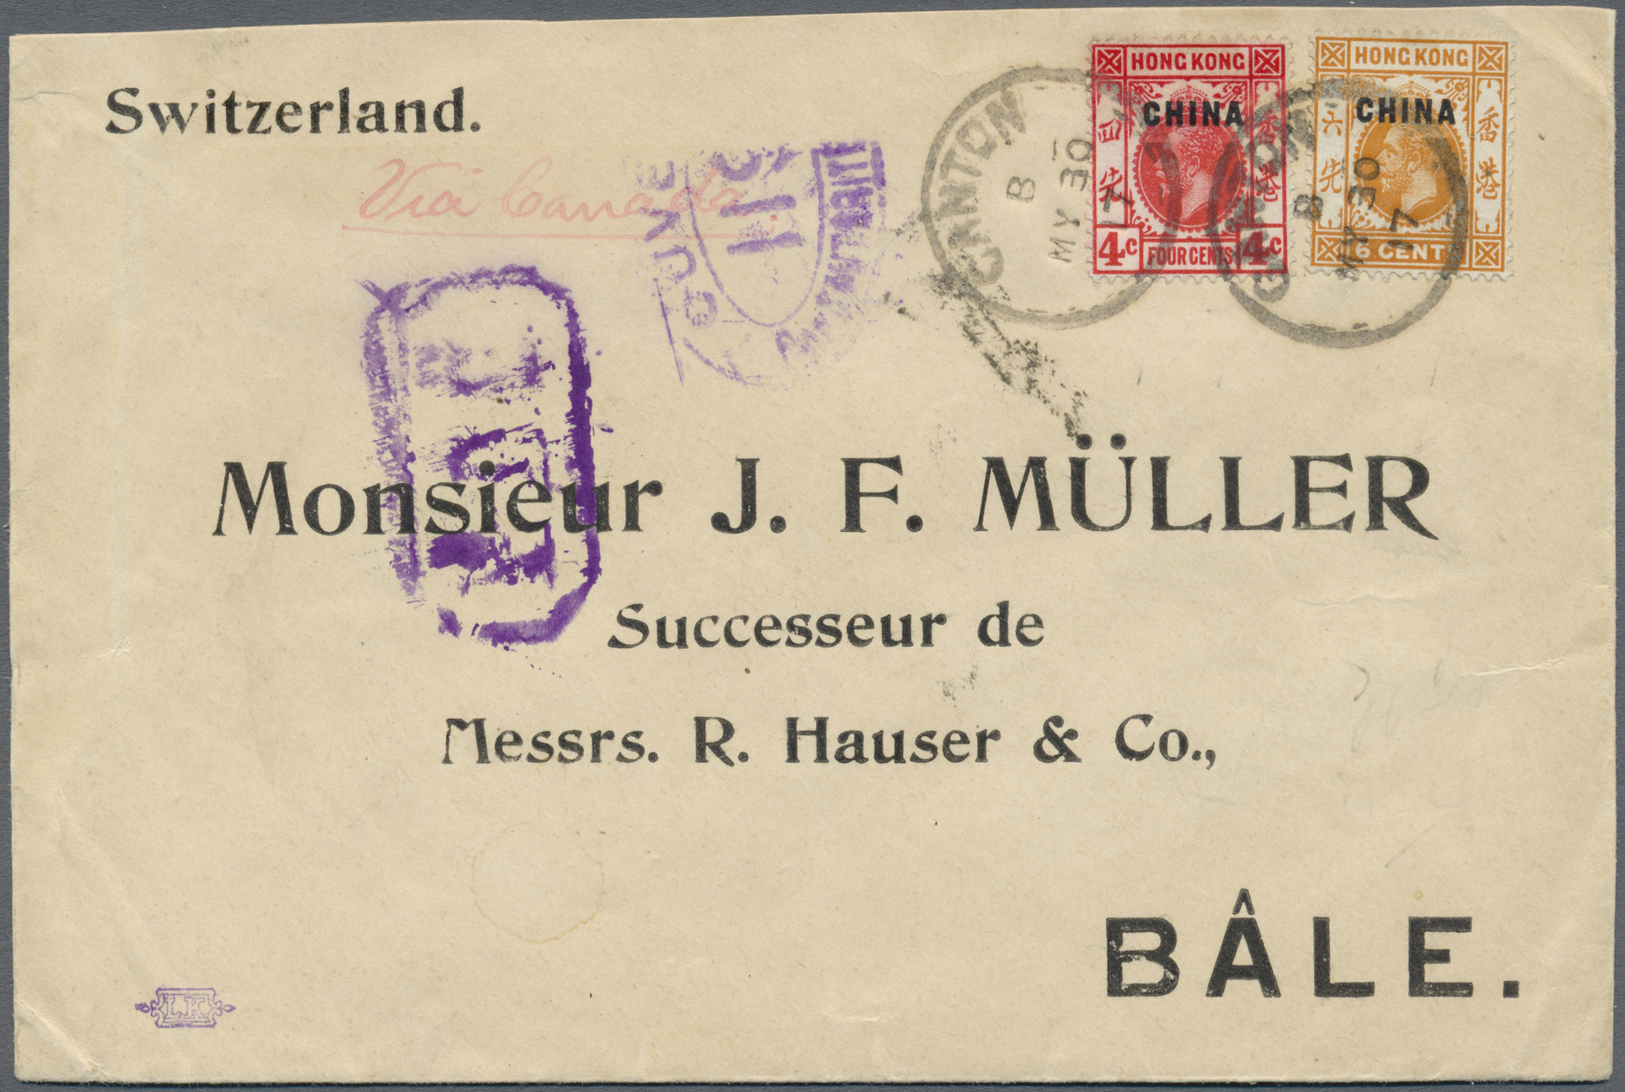 Br Hongkong - Britische Post In China: 1917. Censored Envelope (shortened) Addressed To Switzerland Bearing British Post - Covers & Documents